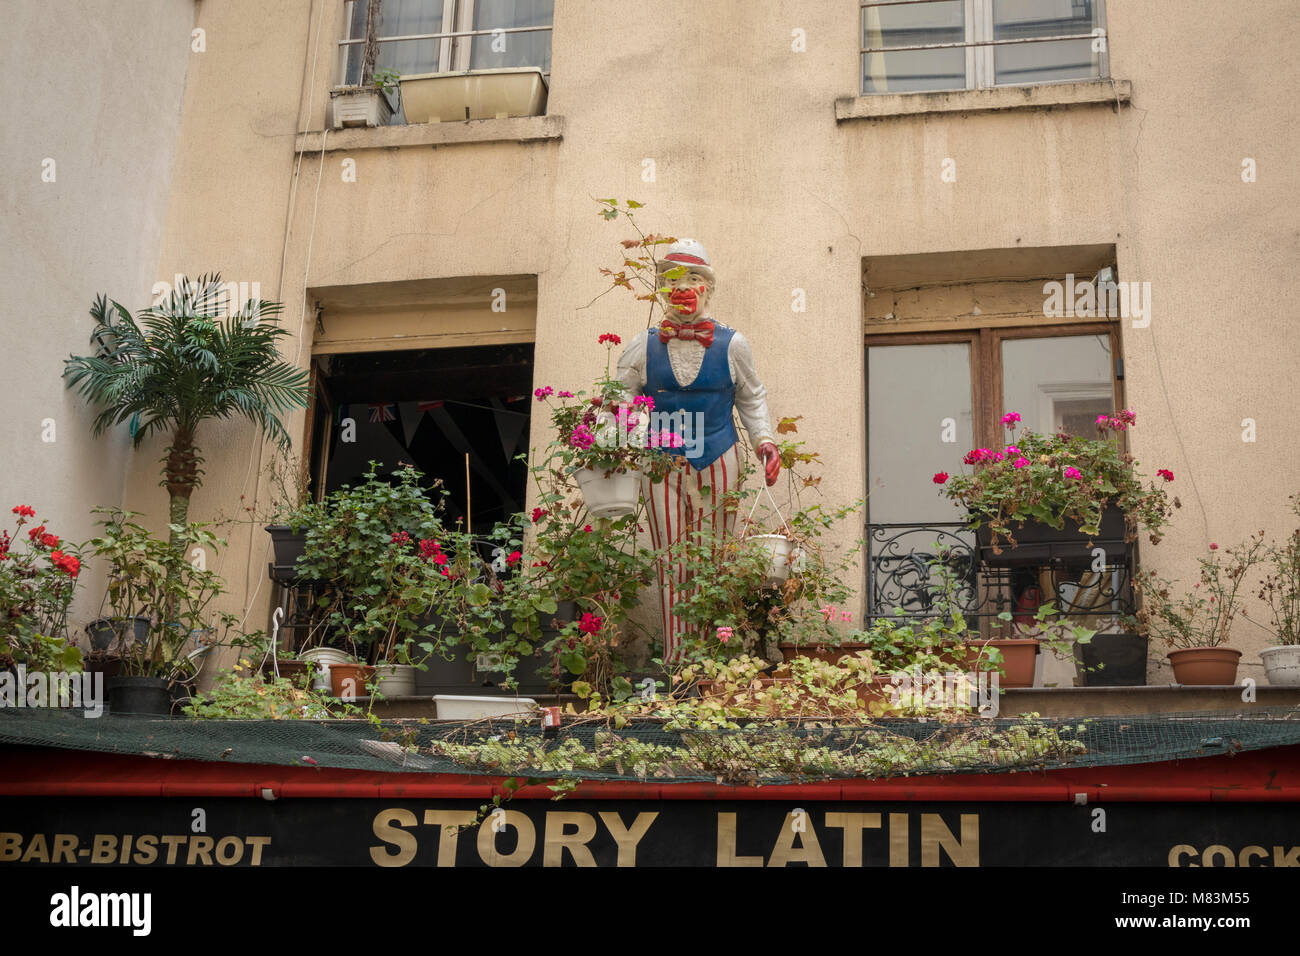 le Story Latin bar bistrot, 15 rue Xavier privas, 75005 Paris, France Stock Photo